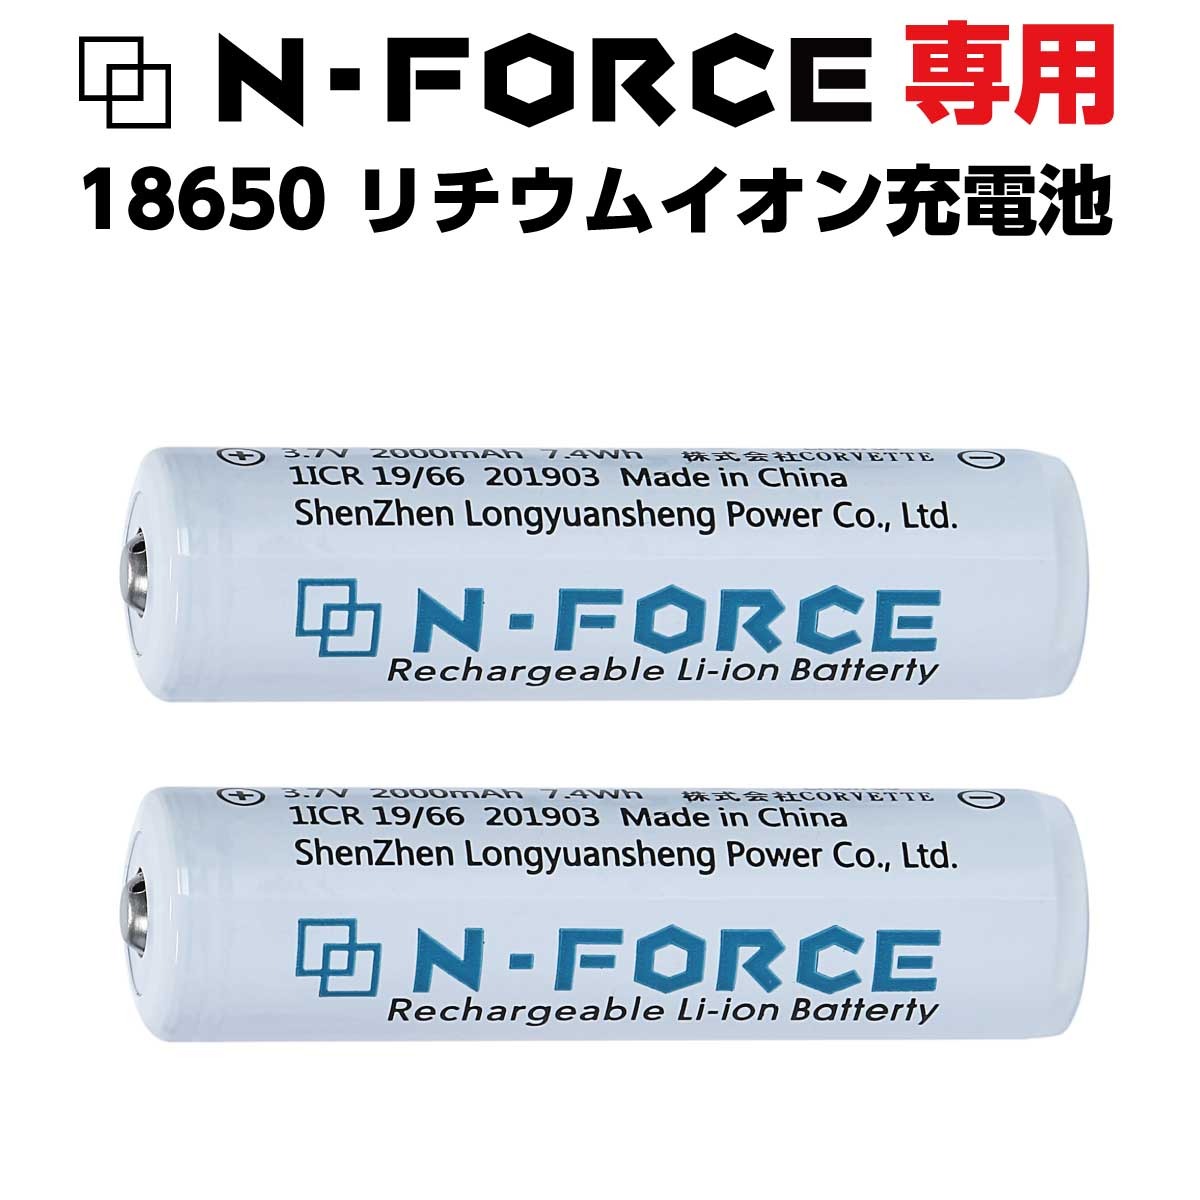 N-FOCE専用 18650リチウムイオン充電池×2本